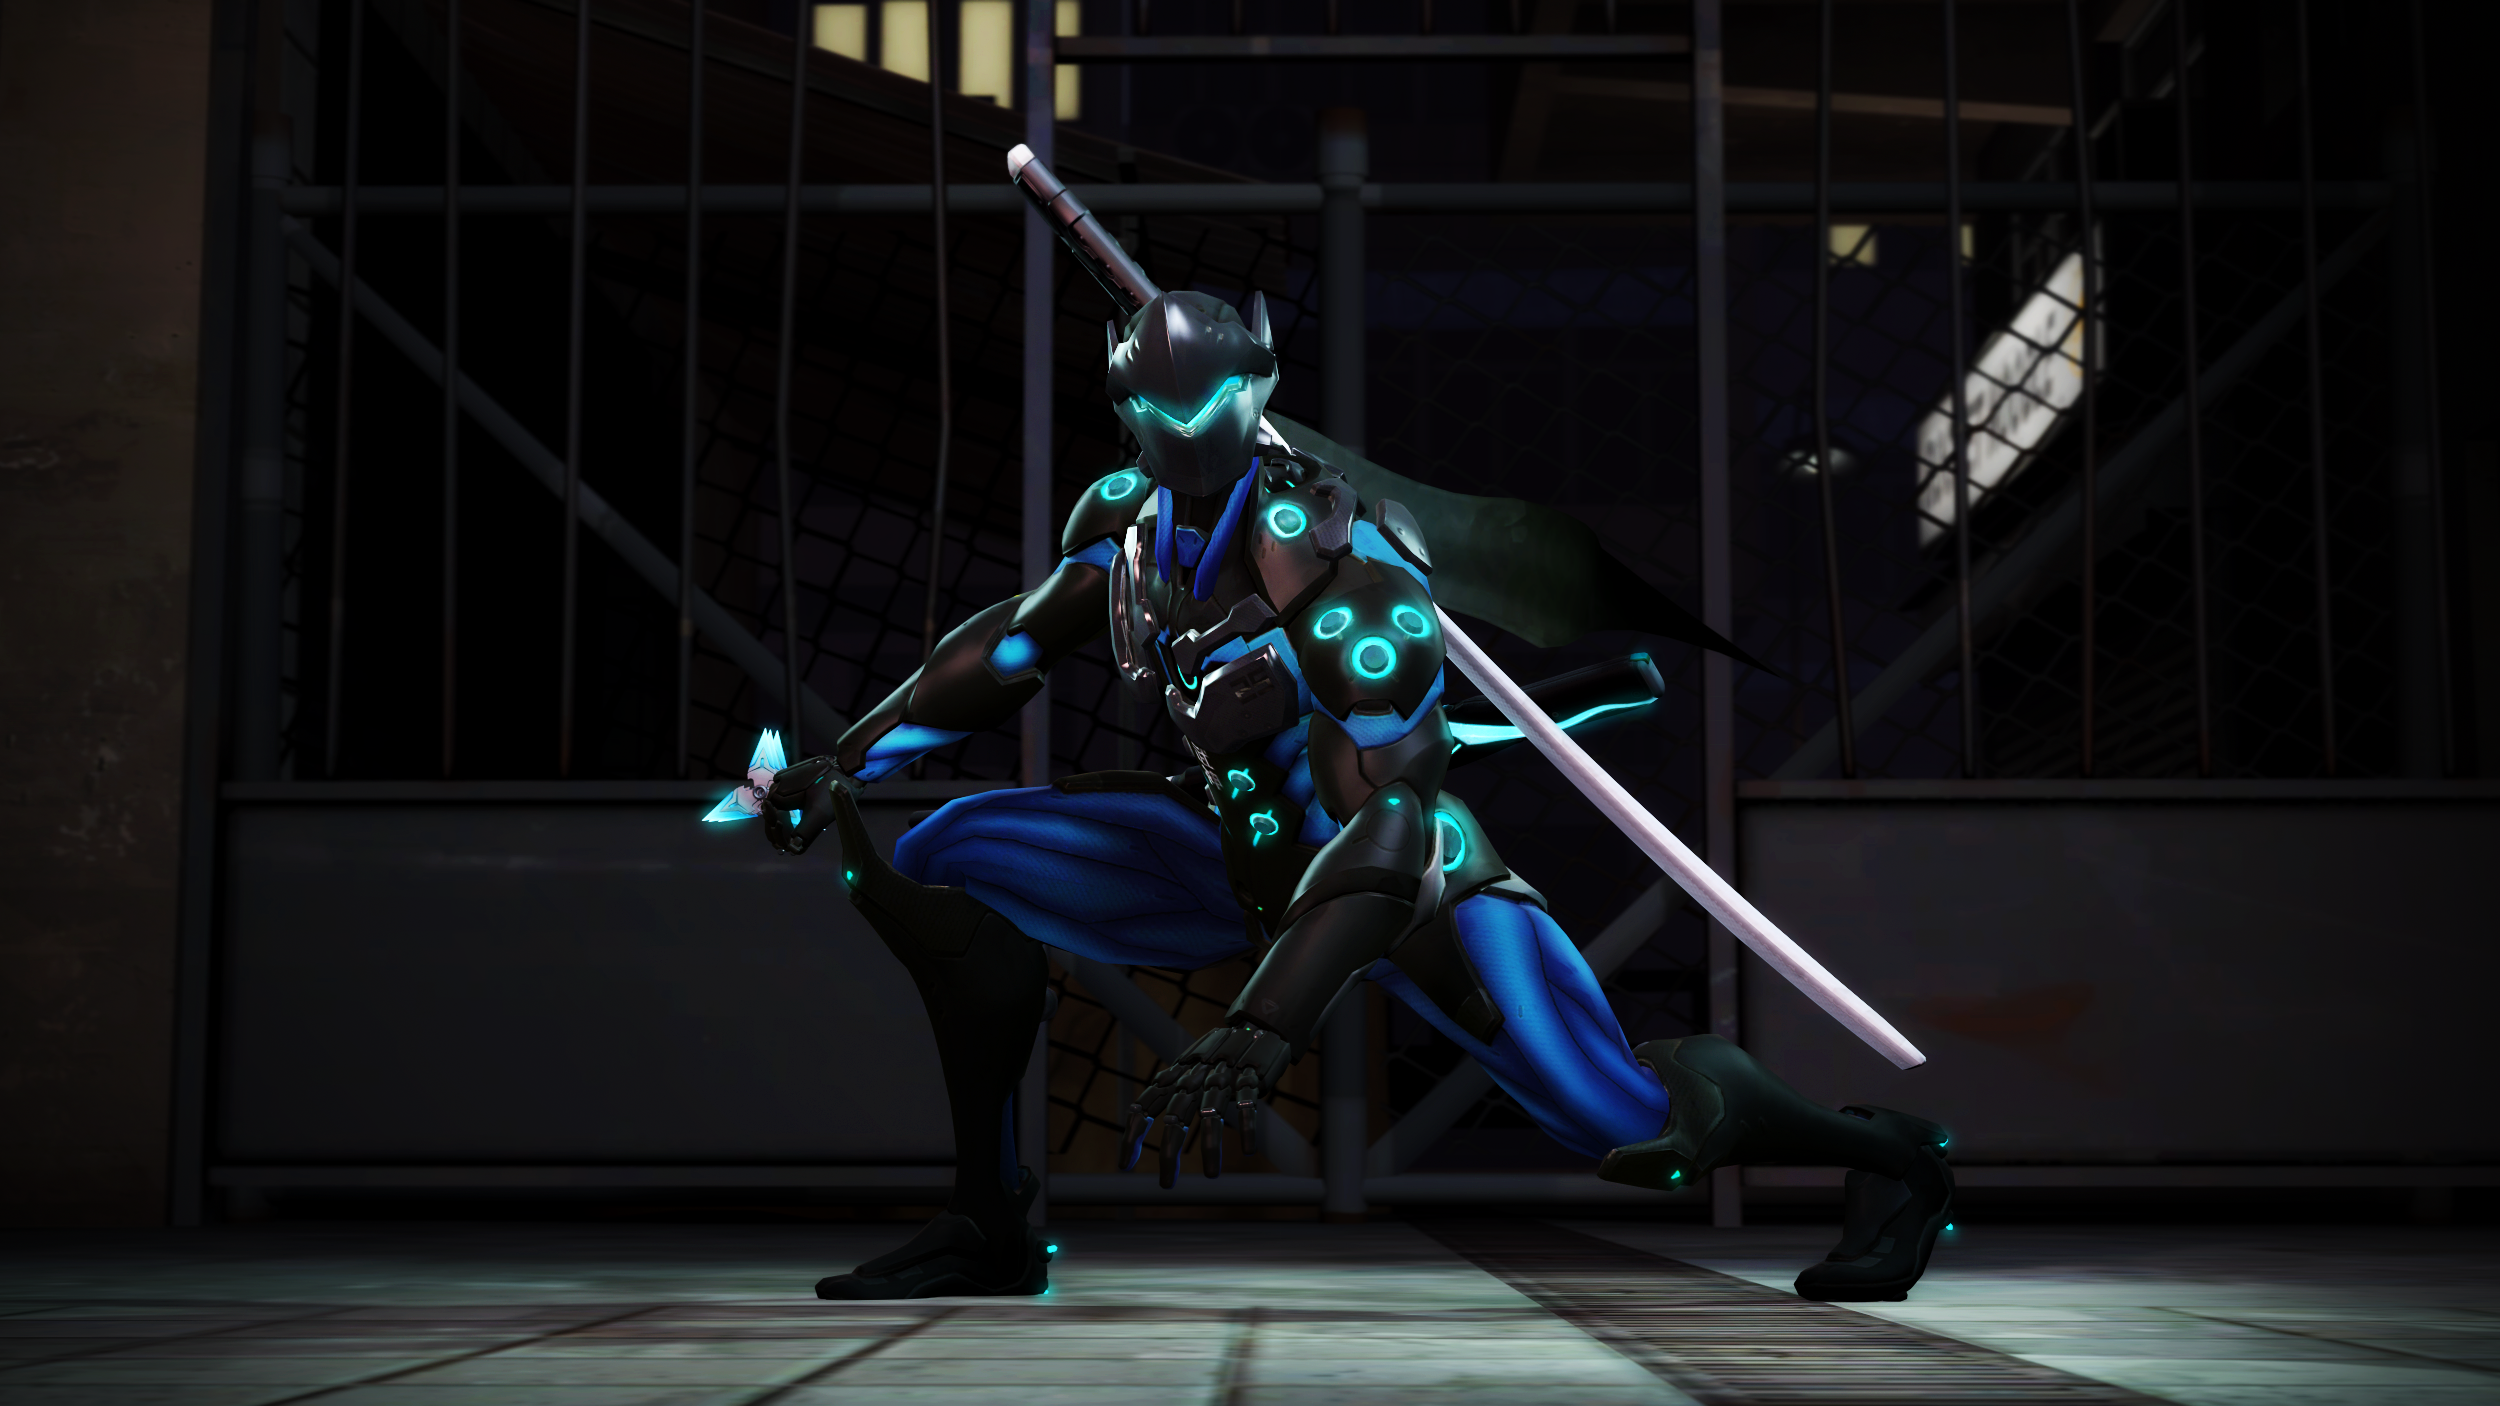 Genji: The Dragonblade Unleashed by ShadowNinjaMaster on DeviantArt